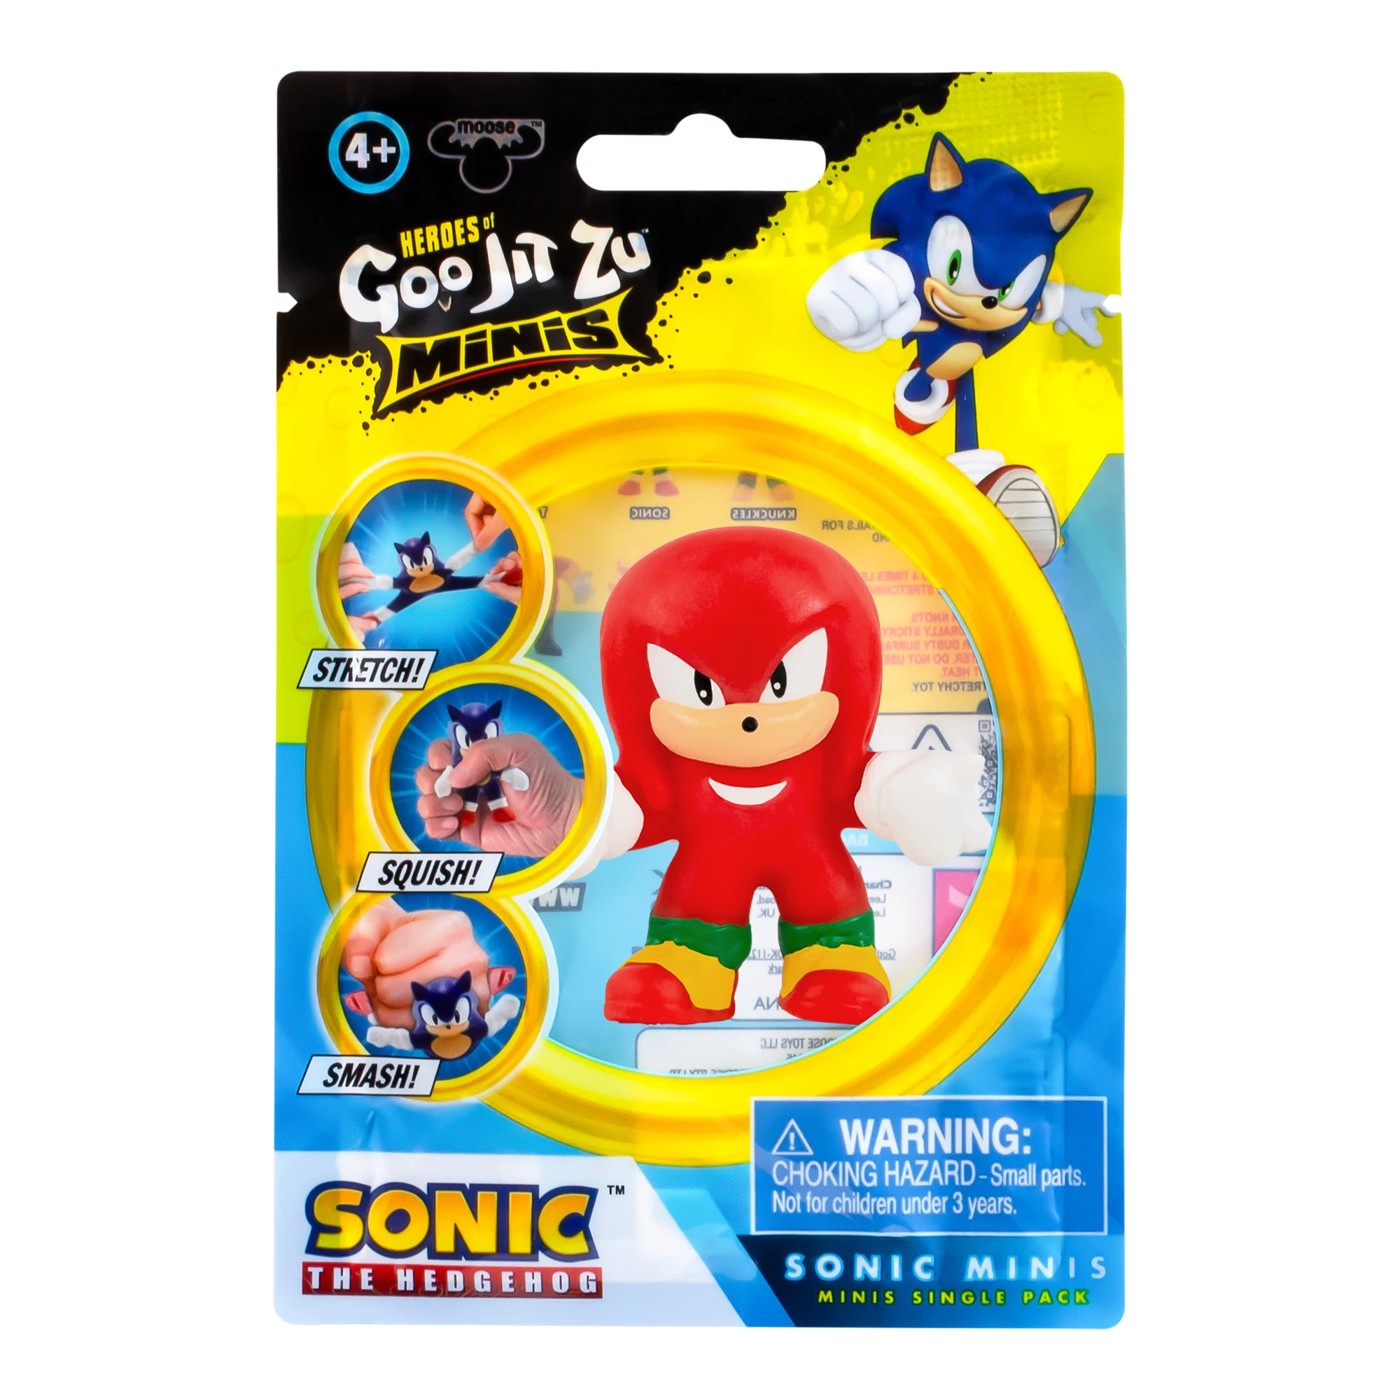 Heroes Of Goo Jit Zu Sonic The Hedgehog Stretch Tails : Target